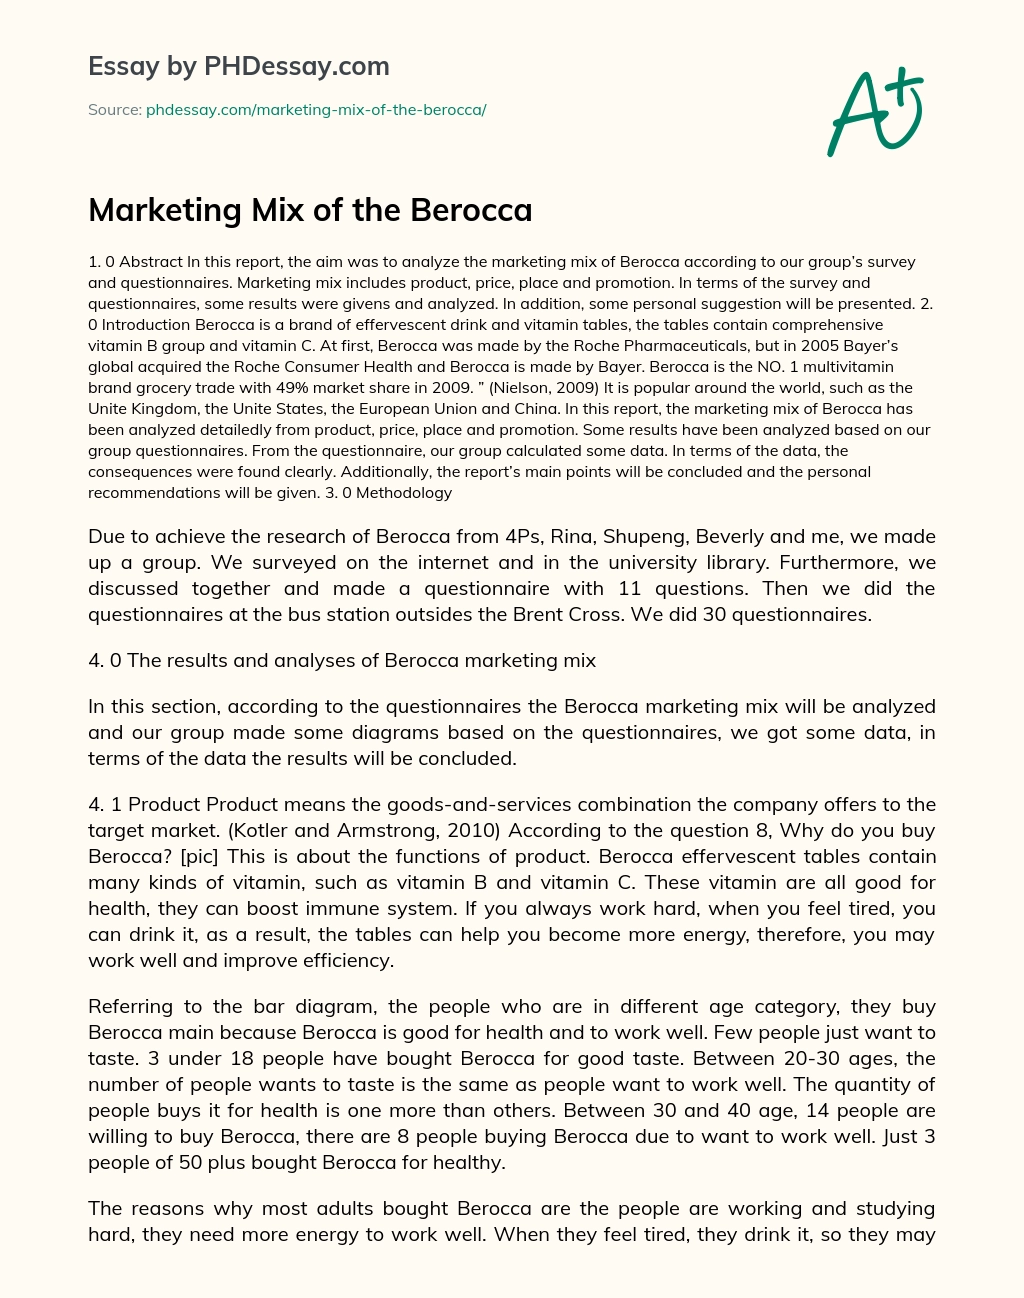 Marketing Mix of the Berocca essay